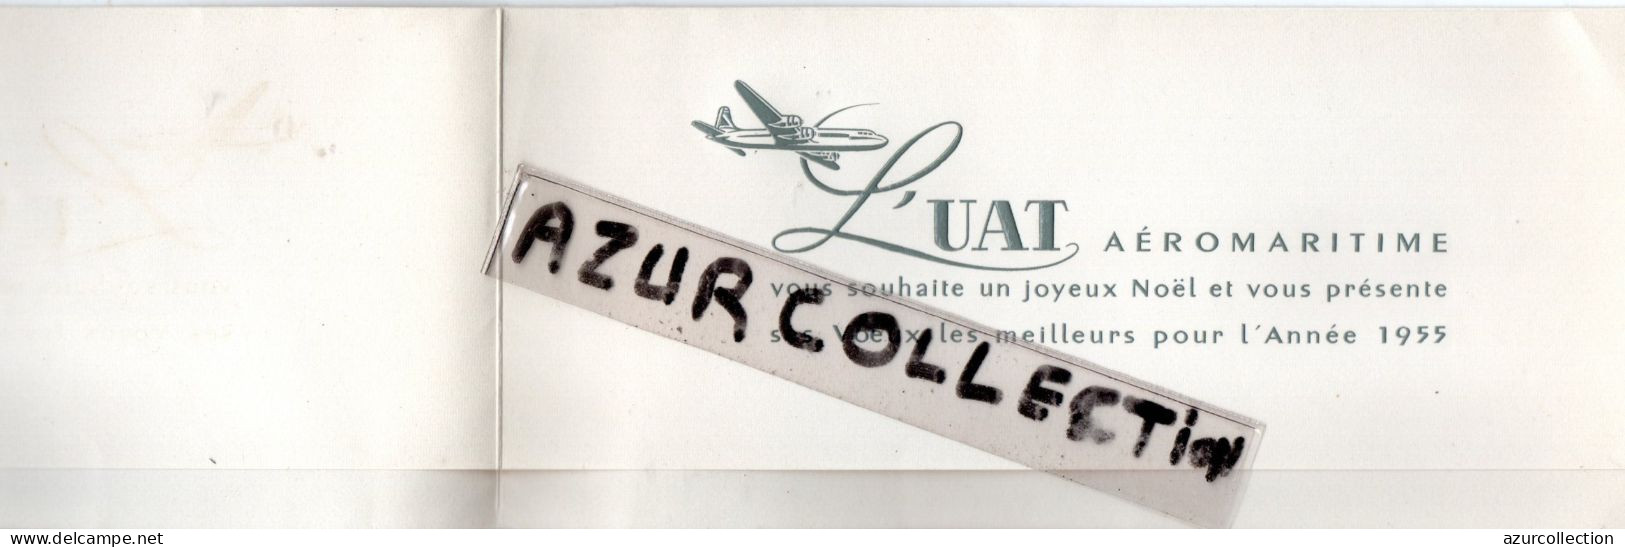 BILLET STYLE . UAT AEROMARITIME . JOYEUX NOEL 1955 - Publicités